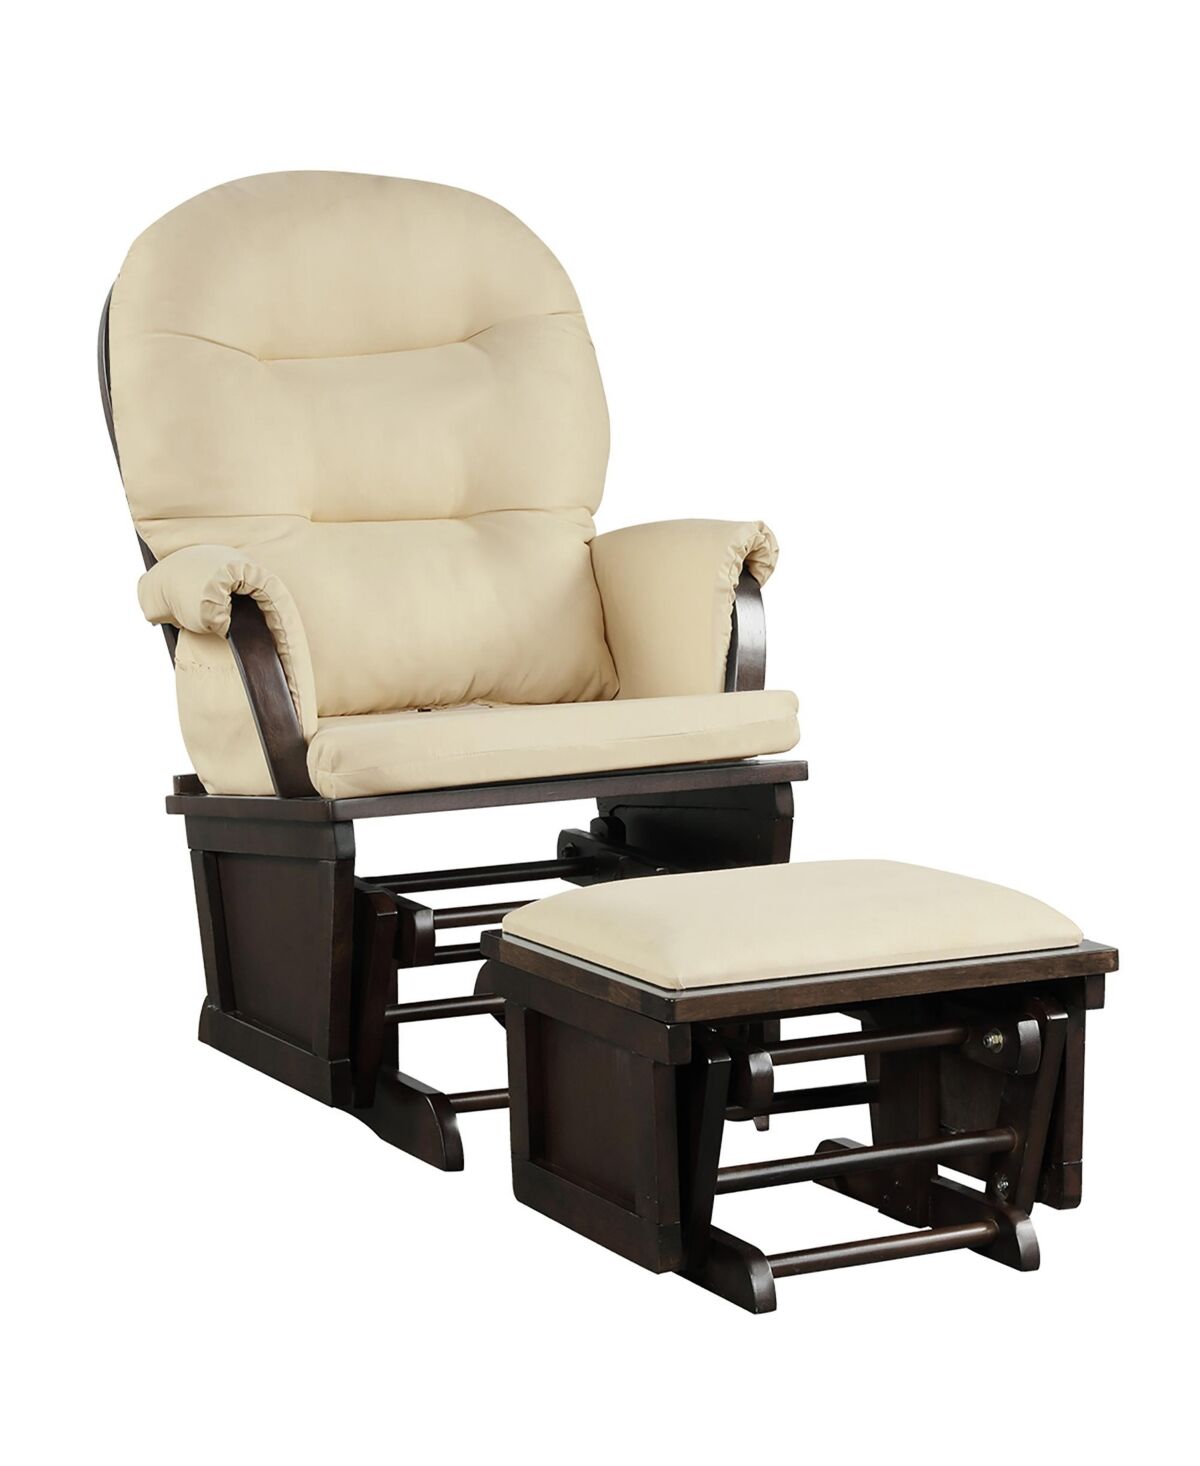 Costway Baby Nursery Relax Rocker Rocking Chair Glider &Ottoman Set w/Cushion - Beige/khaki